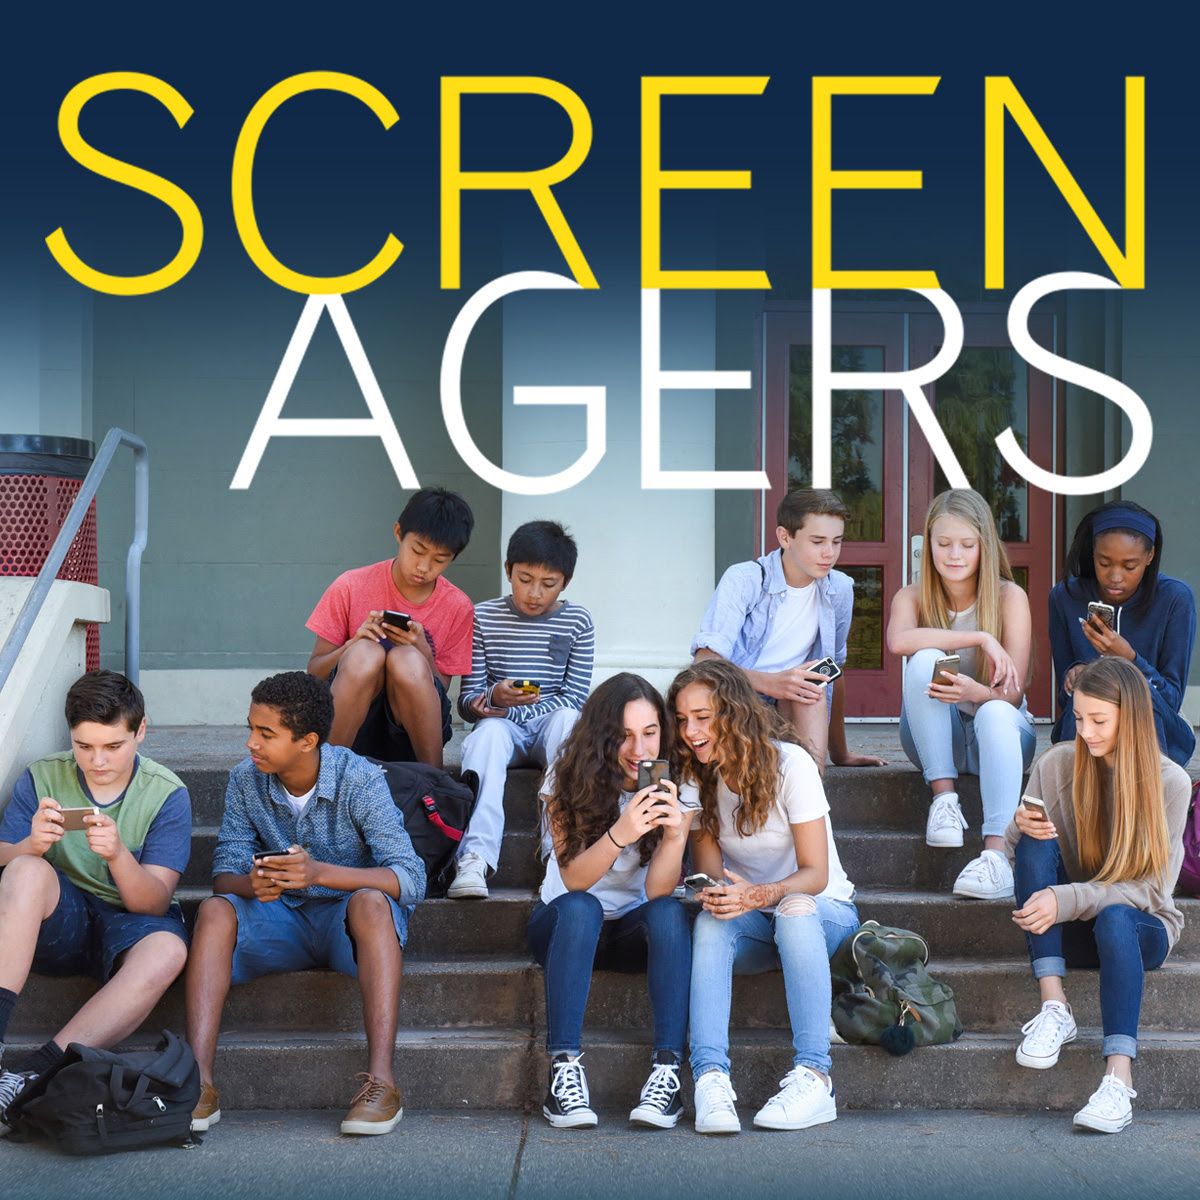 Screenagers Film Presented By Granada Hills Charter High School - AHA